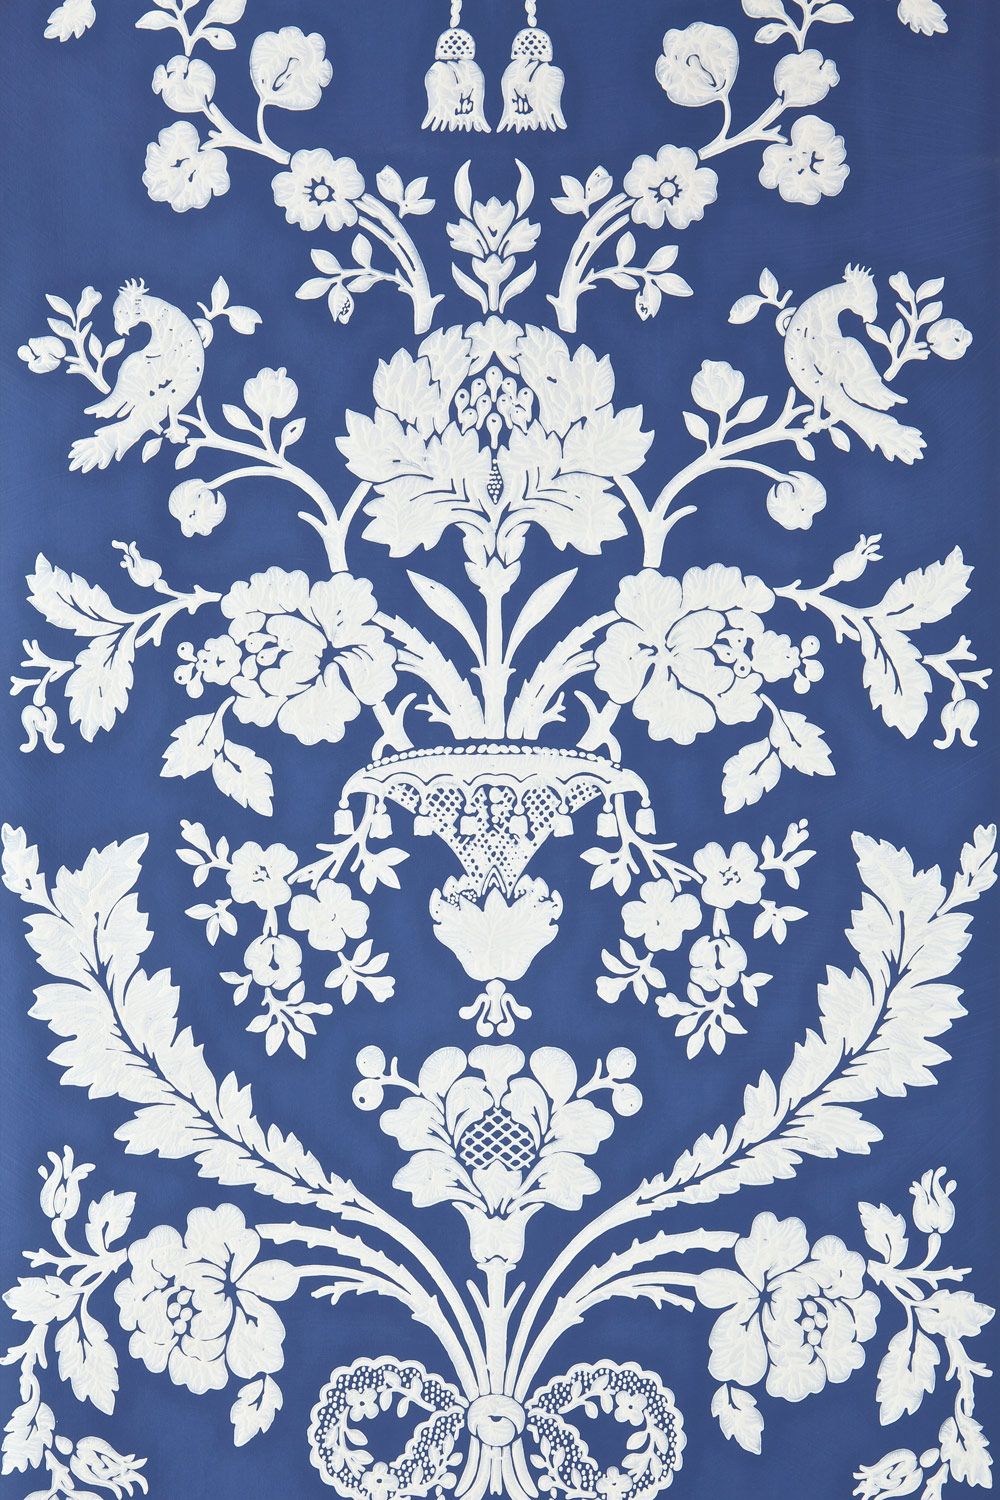 18th century wallpaper, botany, pedicel, pattern, wallpaper, textile